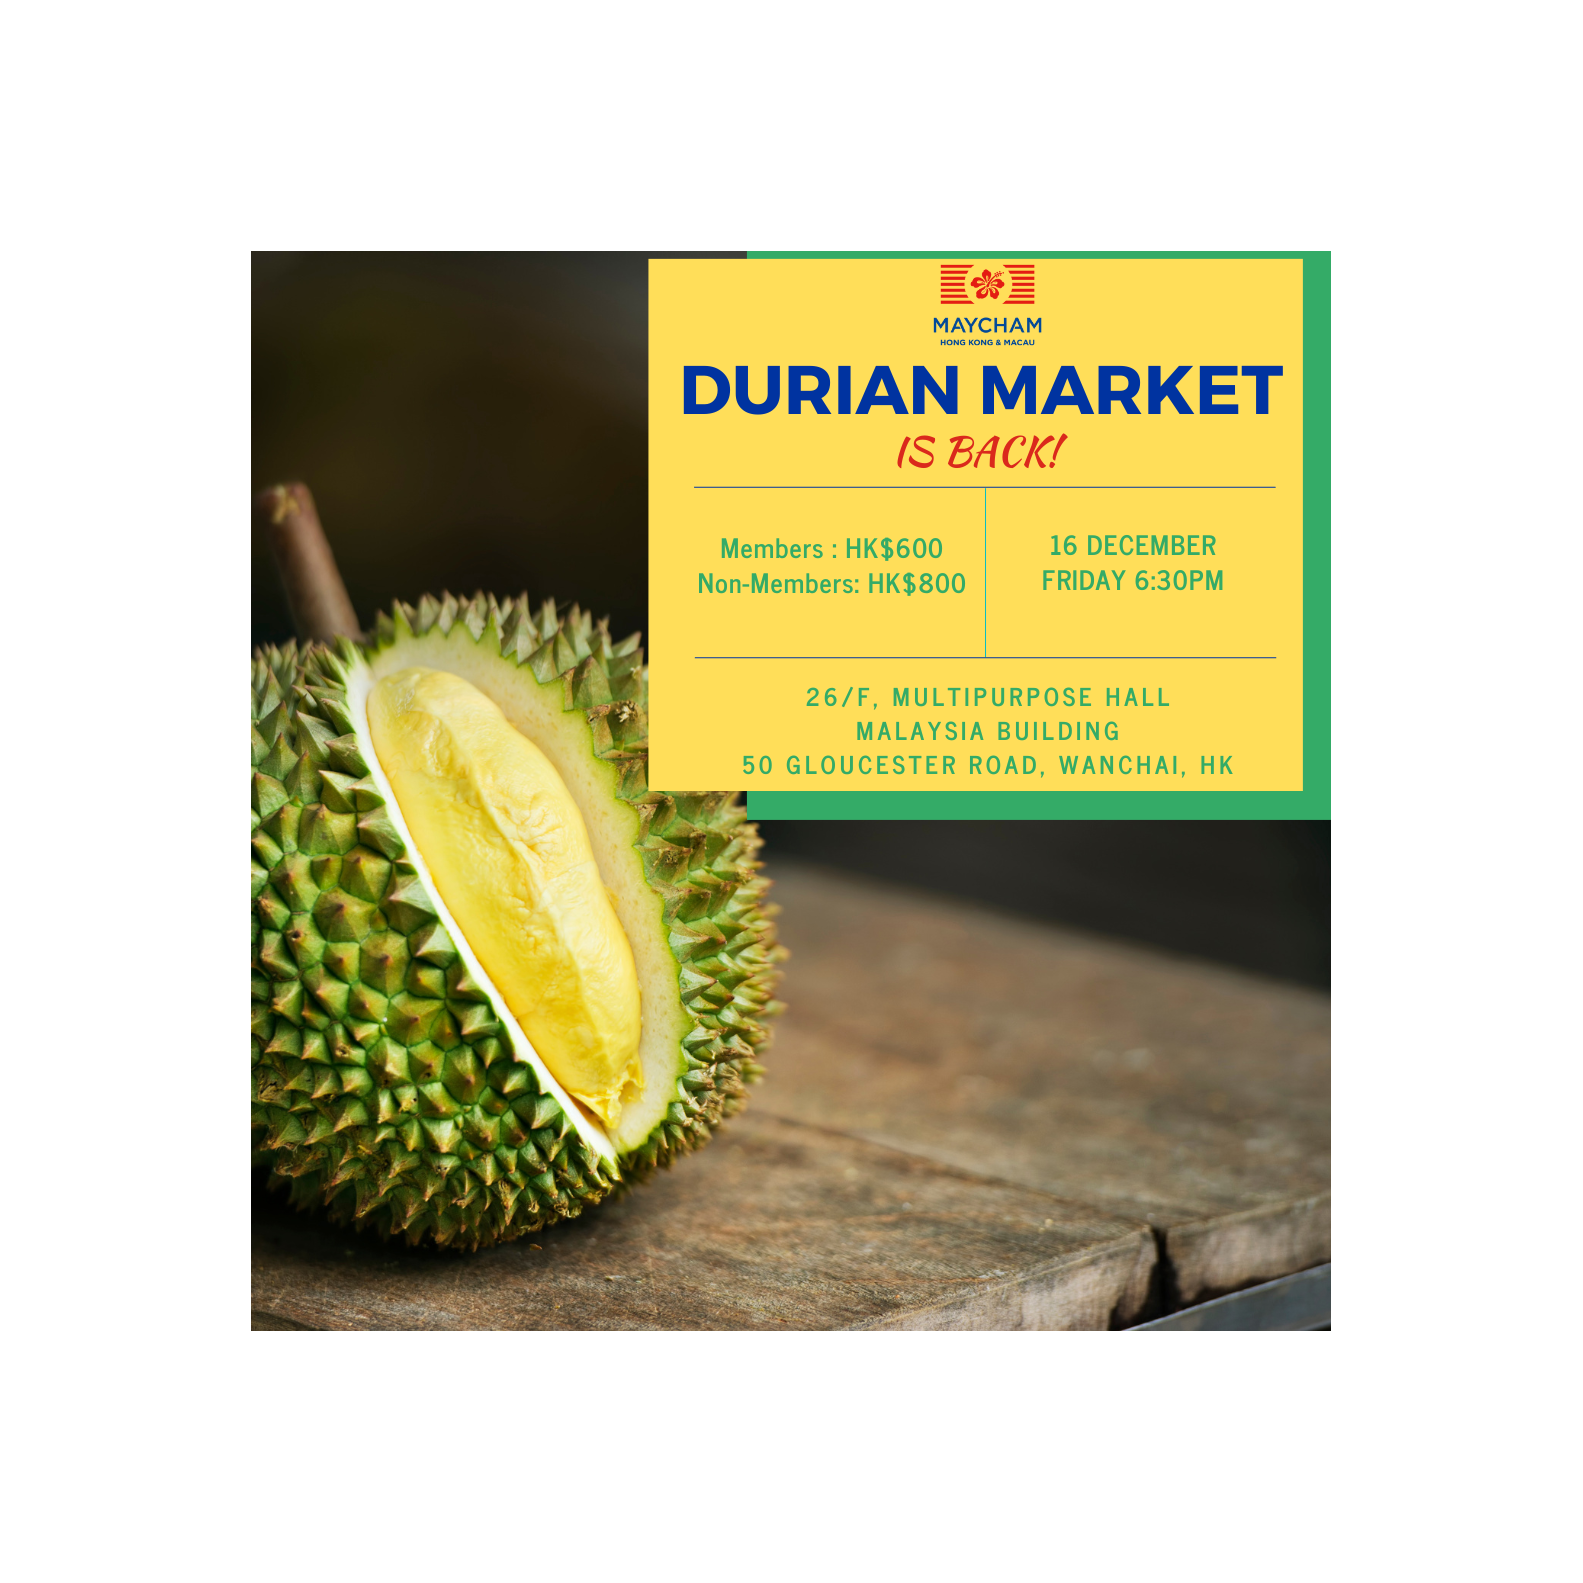 thumbnails Durian Market of Musang King - 16 Dec, 6:30PM